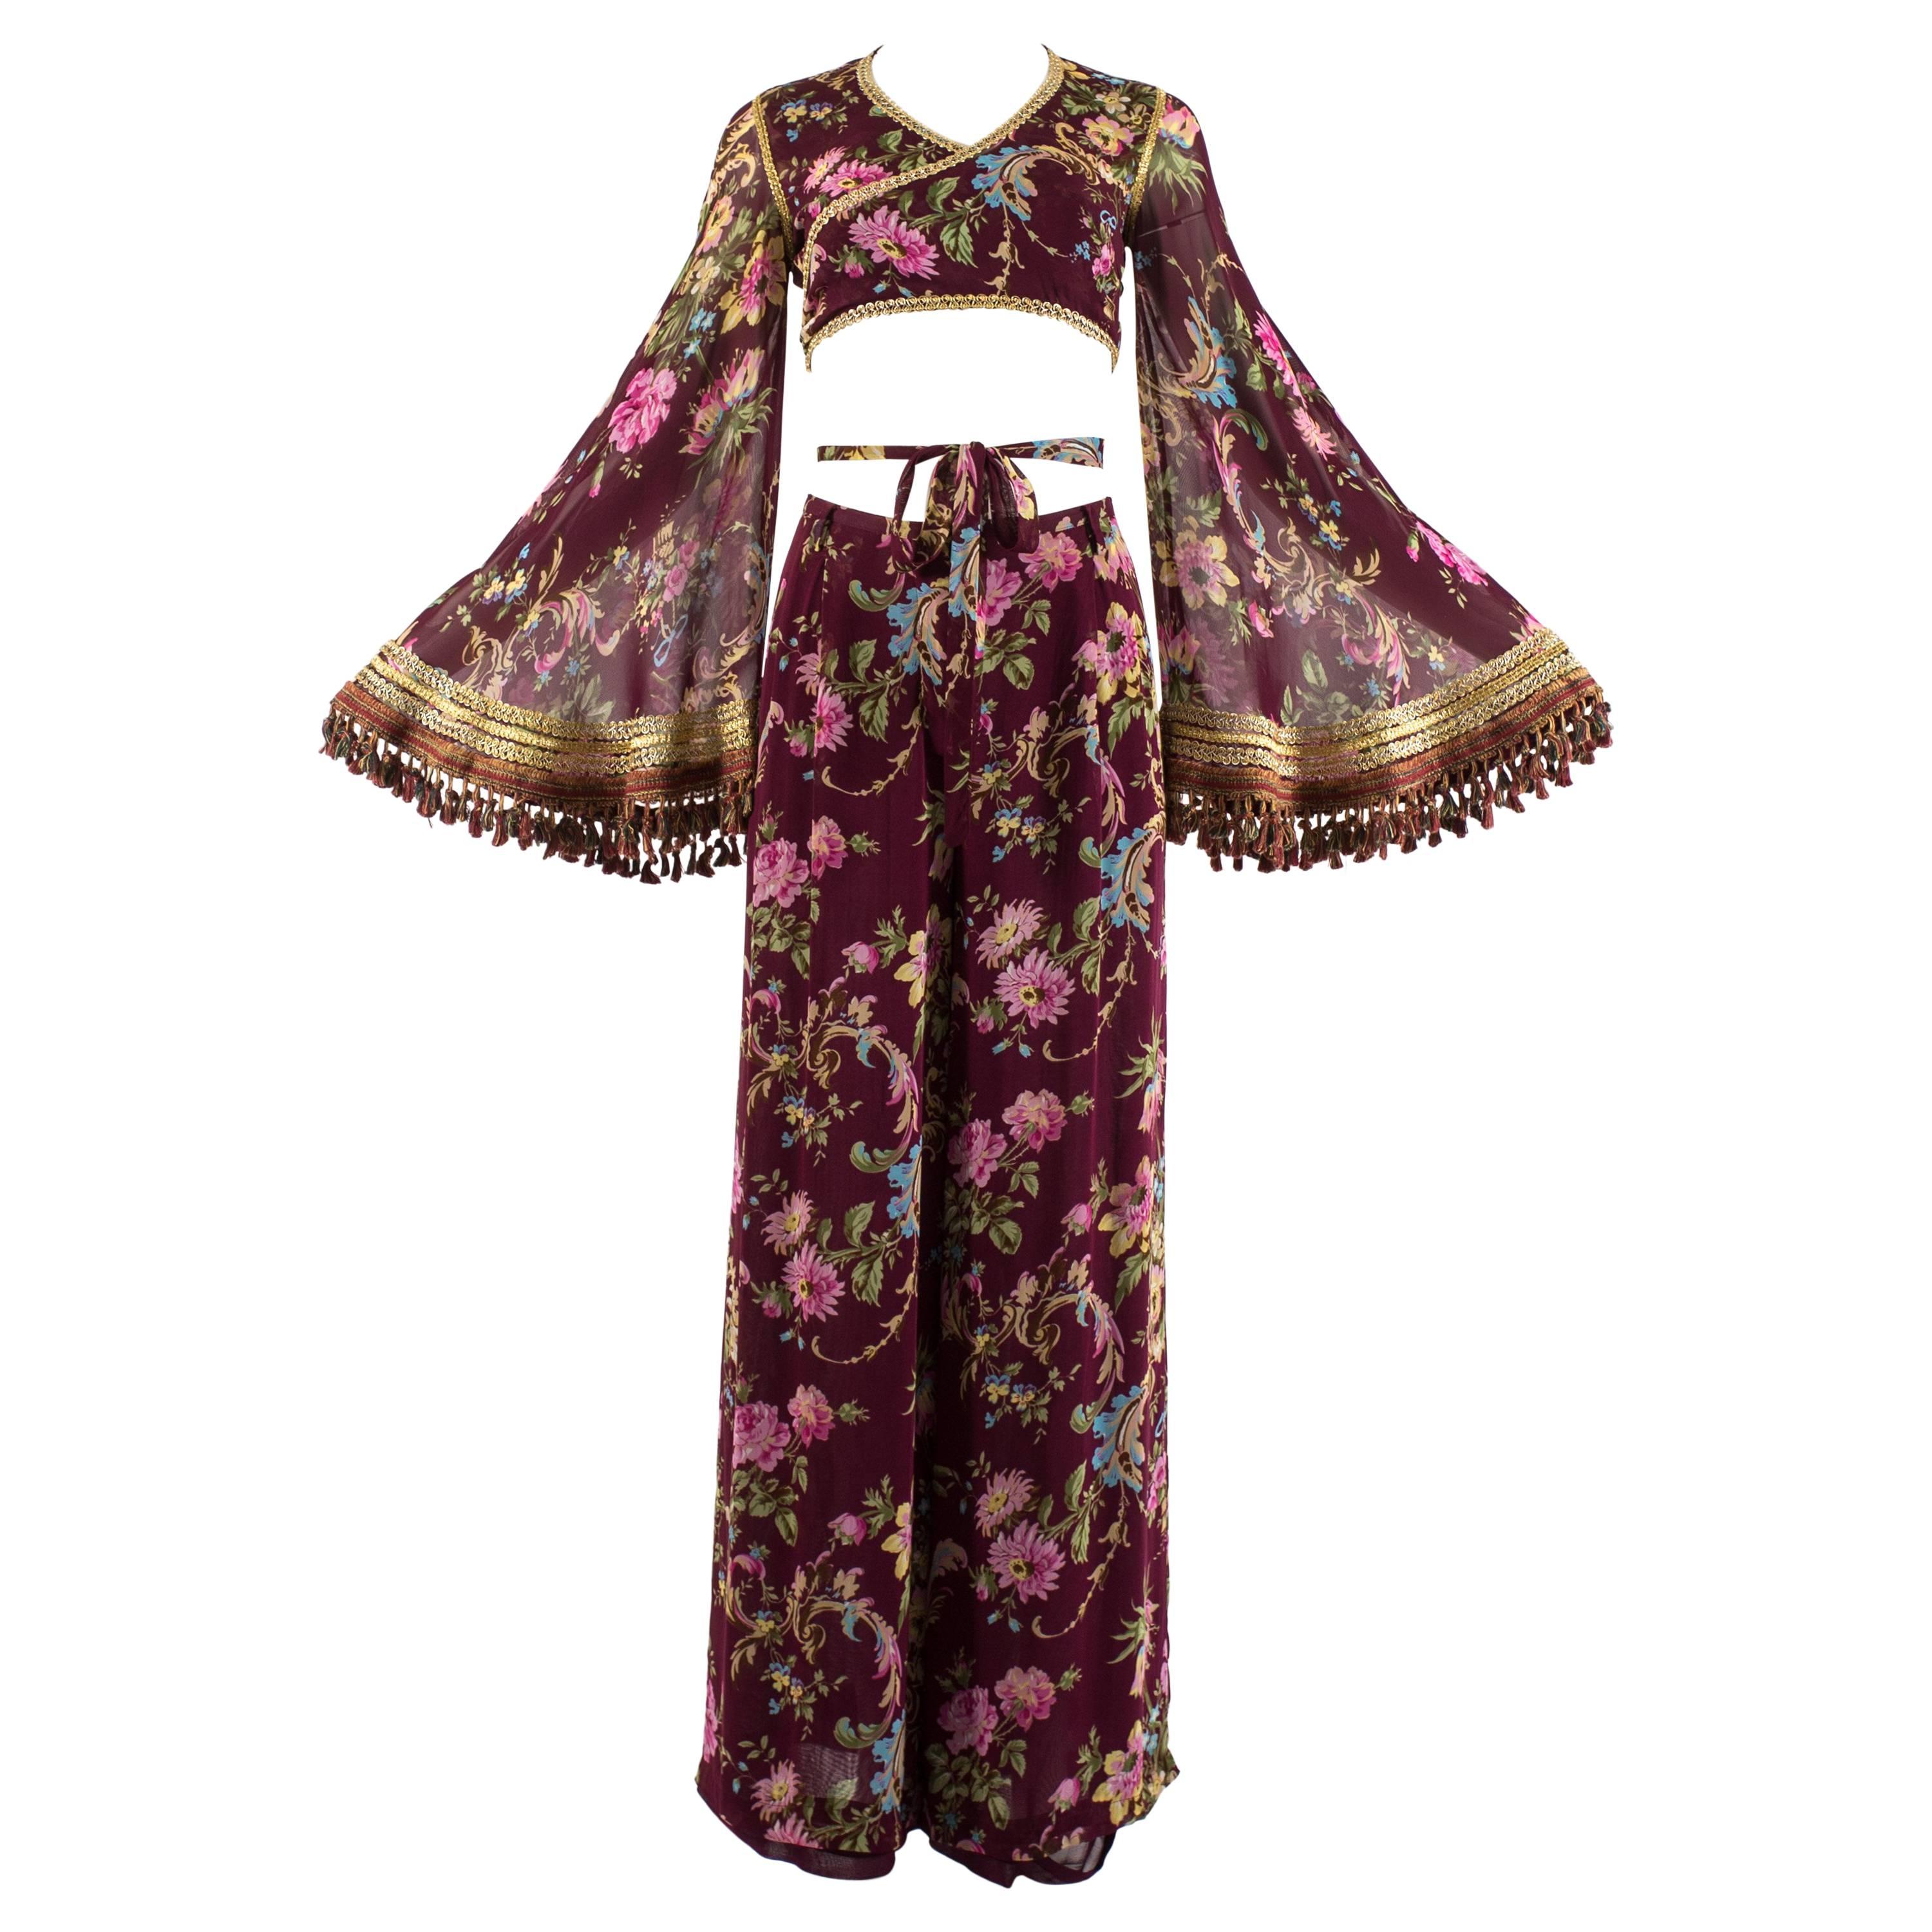 Dolce & Gabbana Spring-Summer 1994 silk chiffon gypsy pant suit 